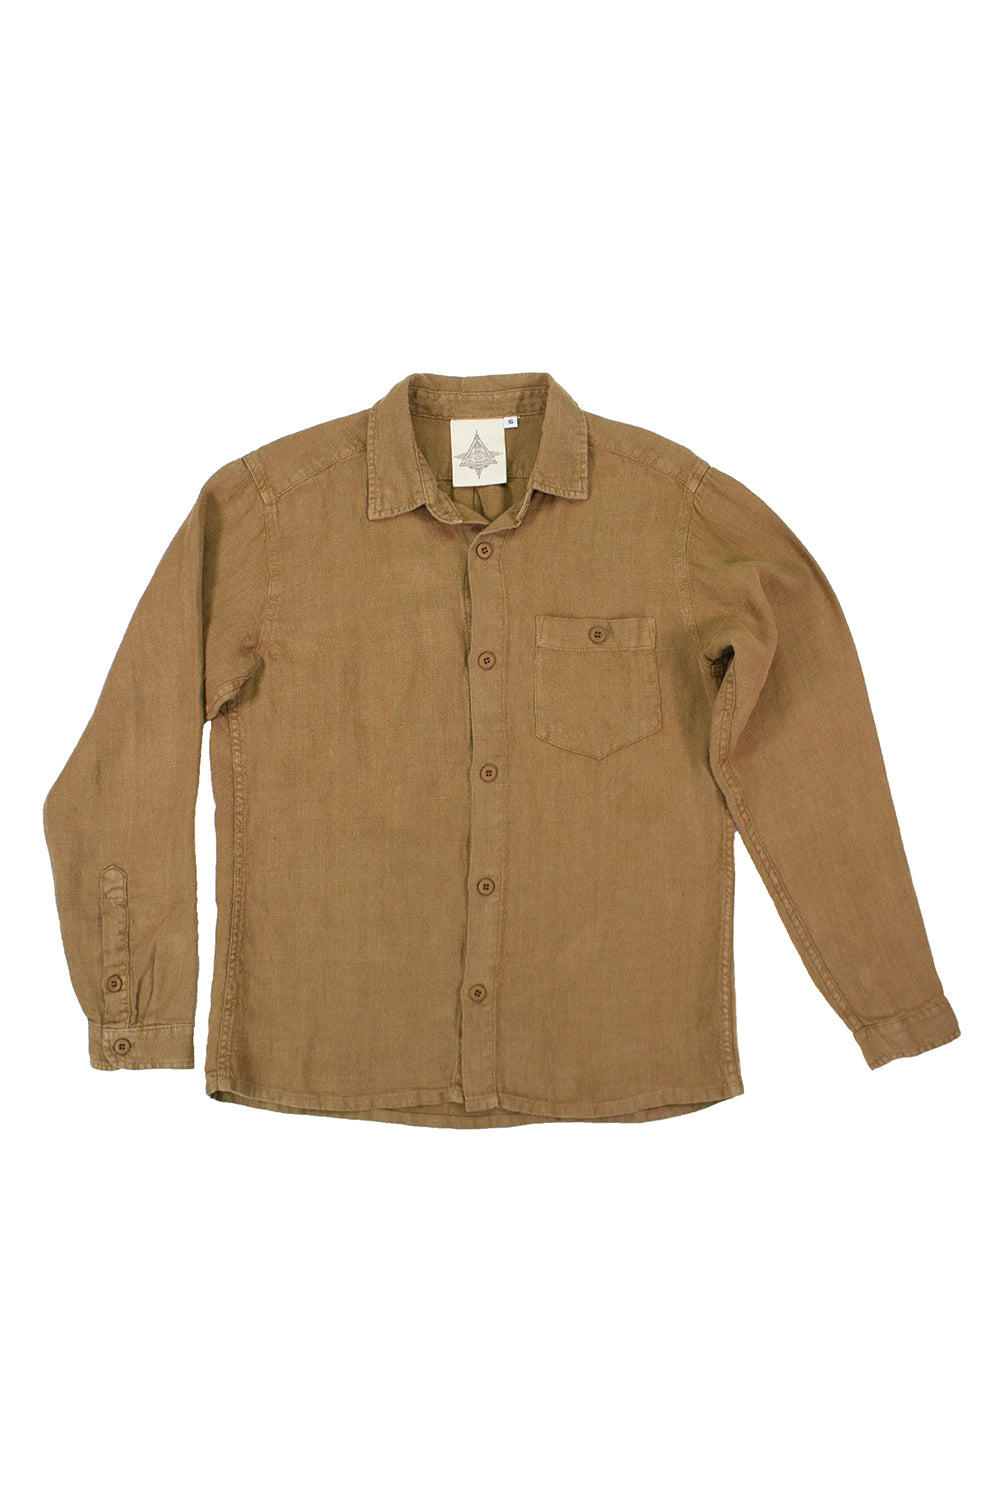 Lassen 100% Hemp Shirt | Jungmaven Hemp Clothing & Accessories / Color: Coyote